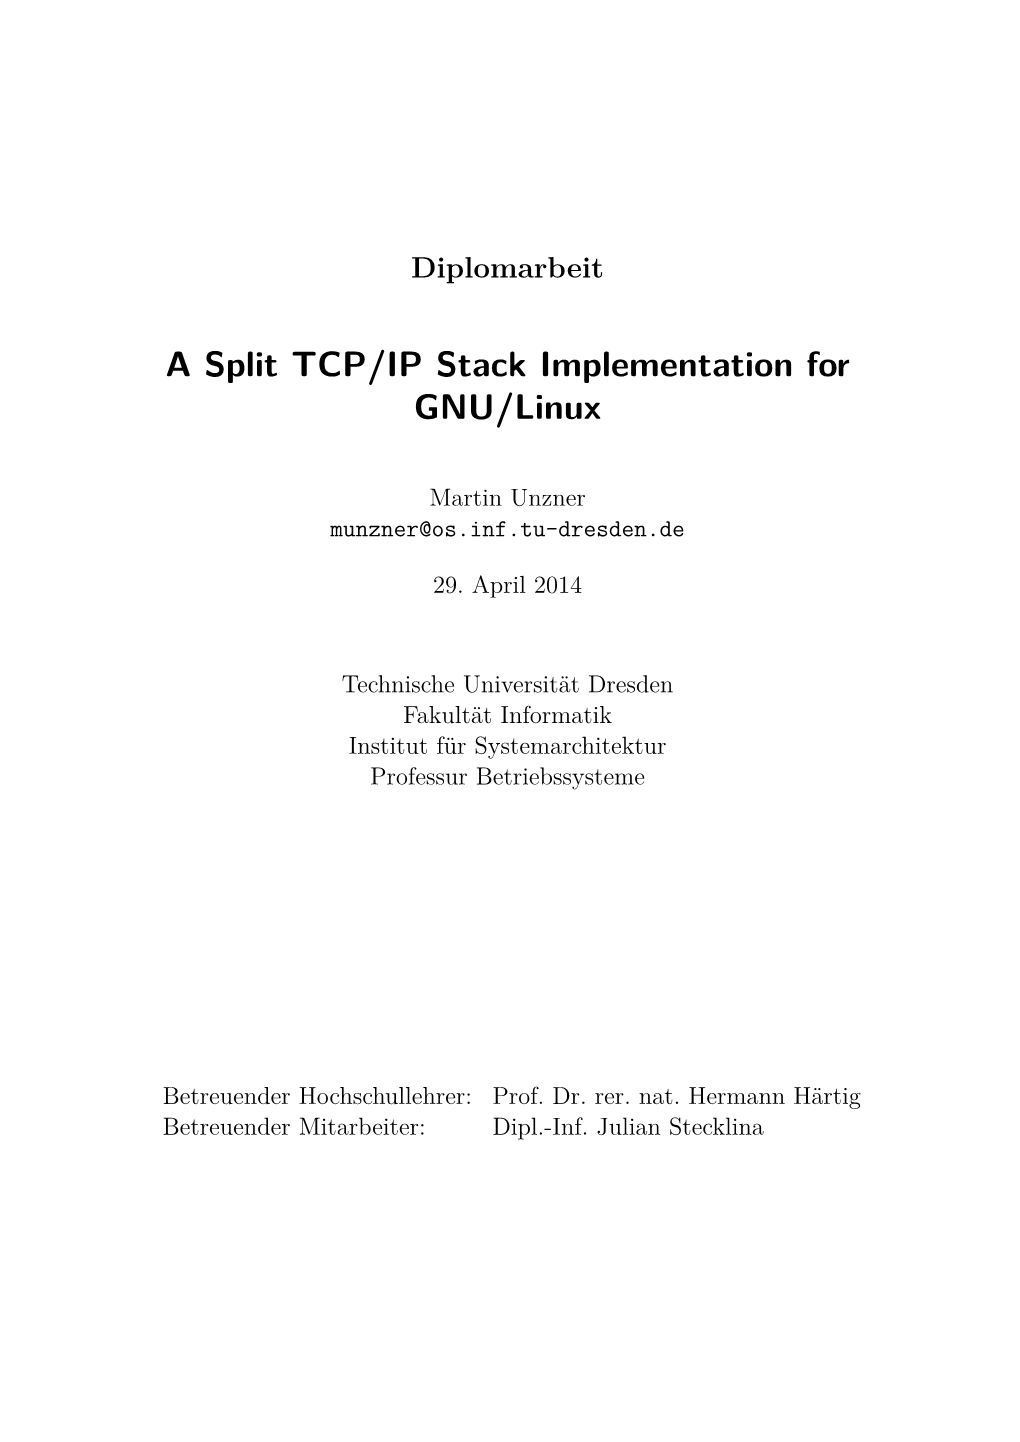 A Split TCP/IP Stack Implementation for GNU/Linux